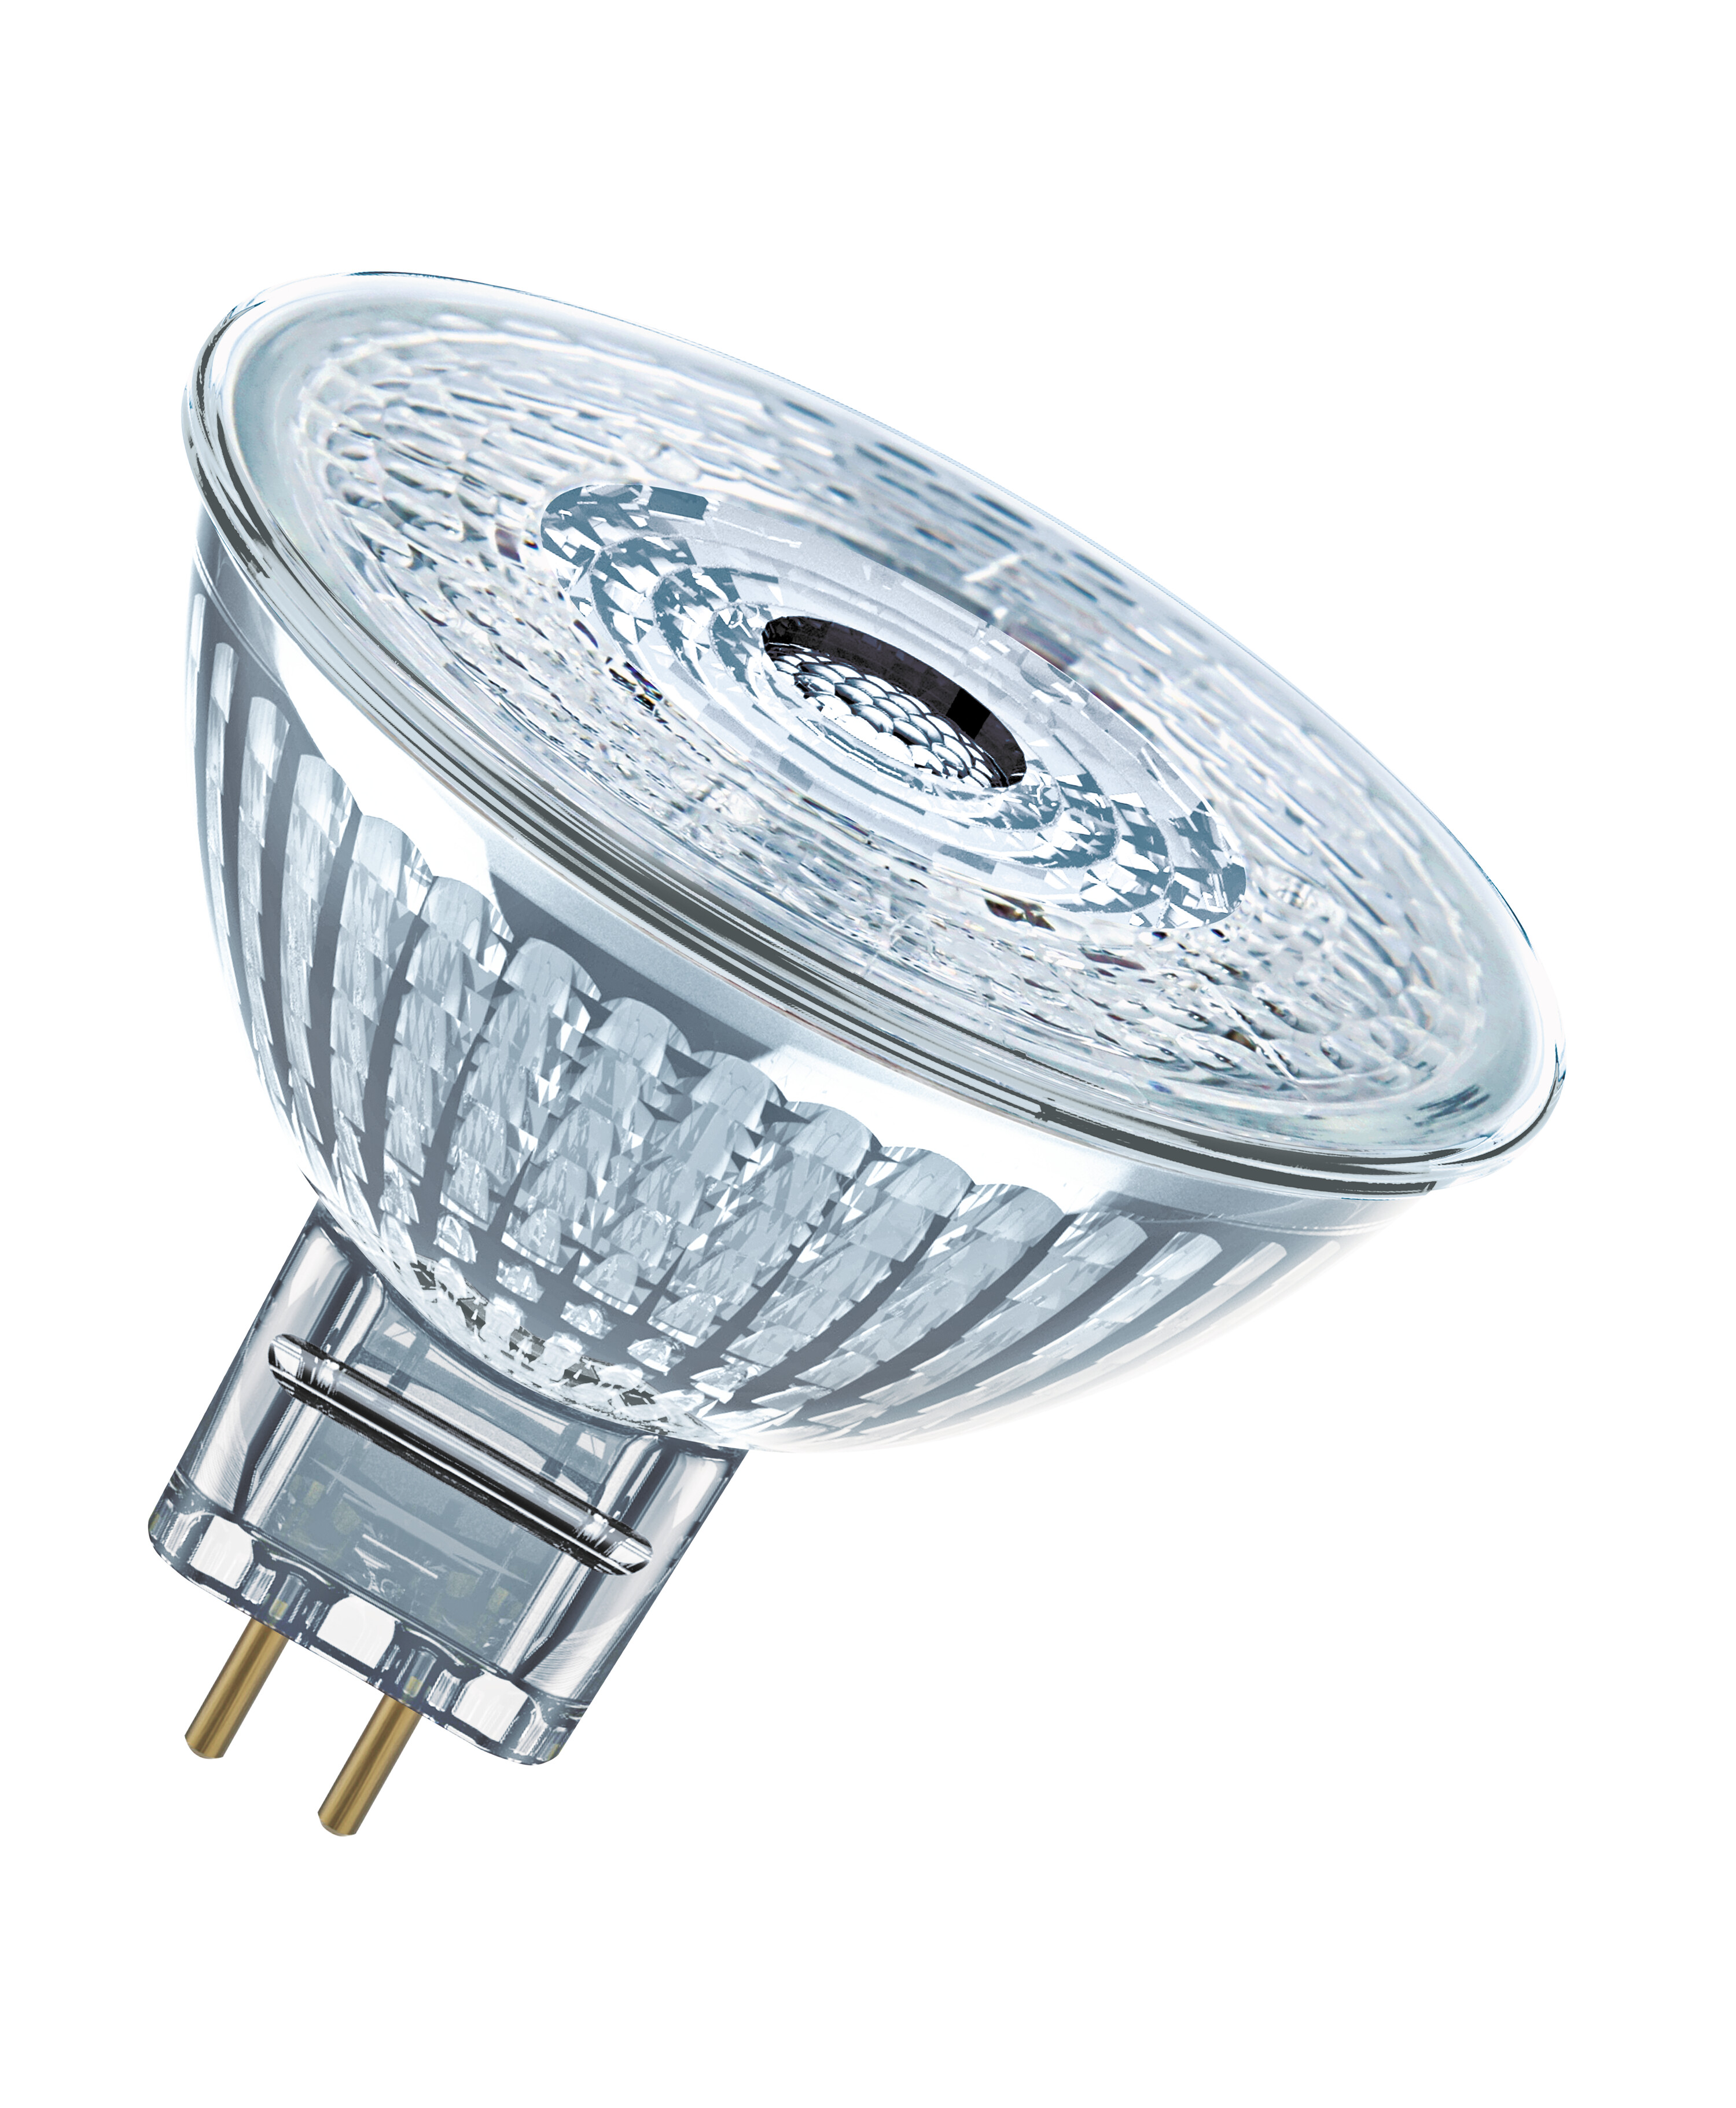 OSRAM  STAR 12 LED MR16 Kaltweiß Lampe LED V